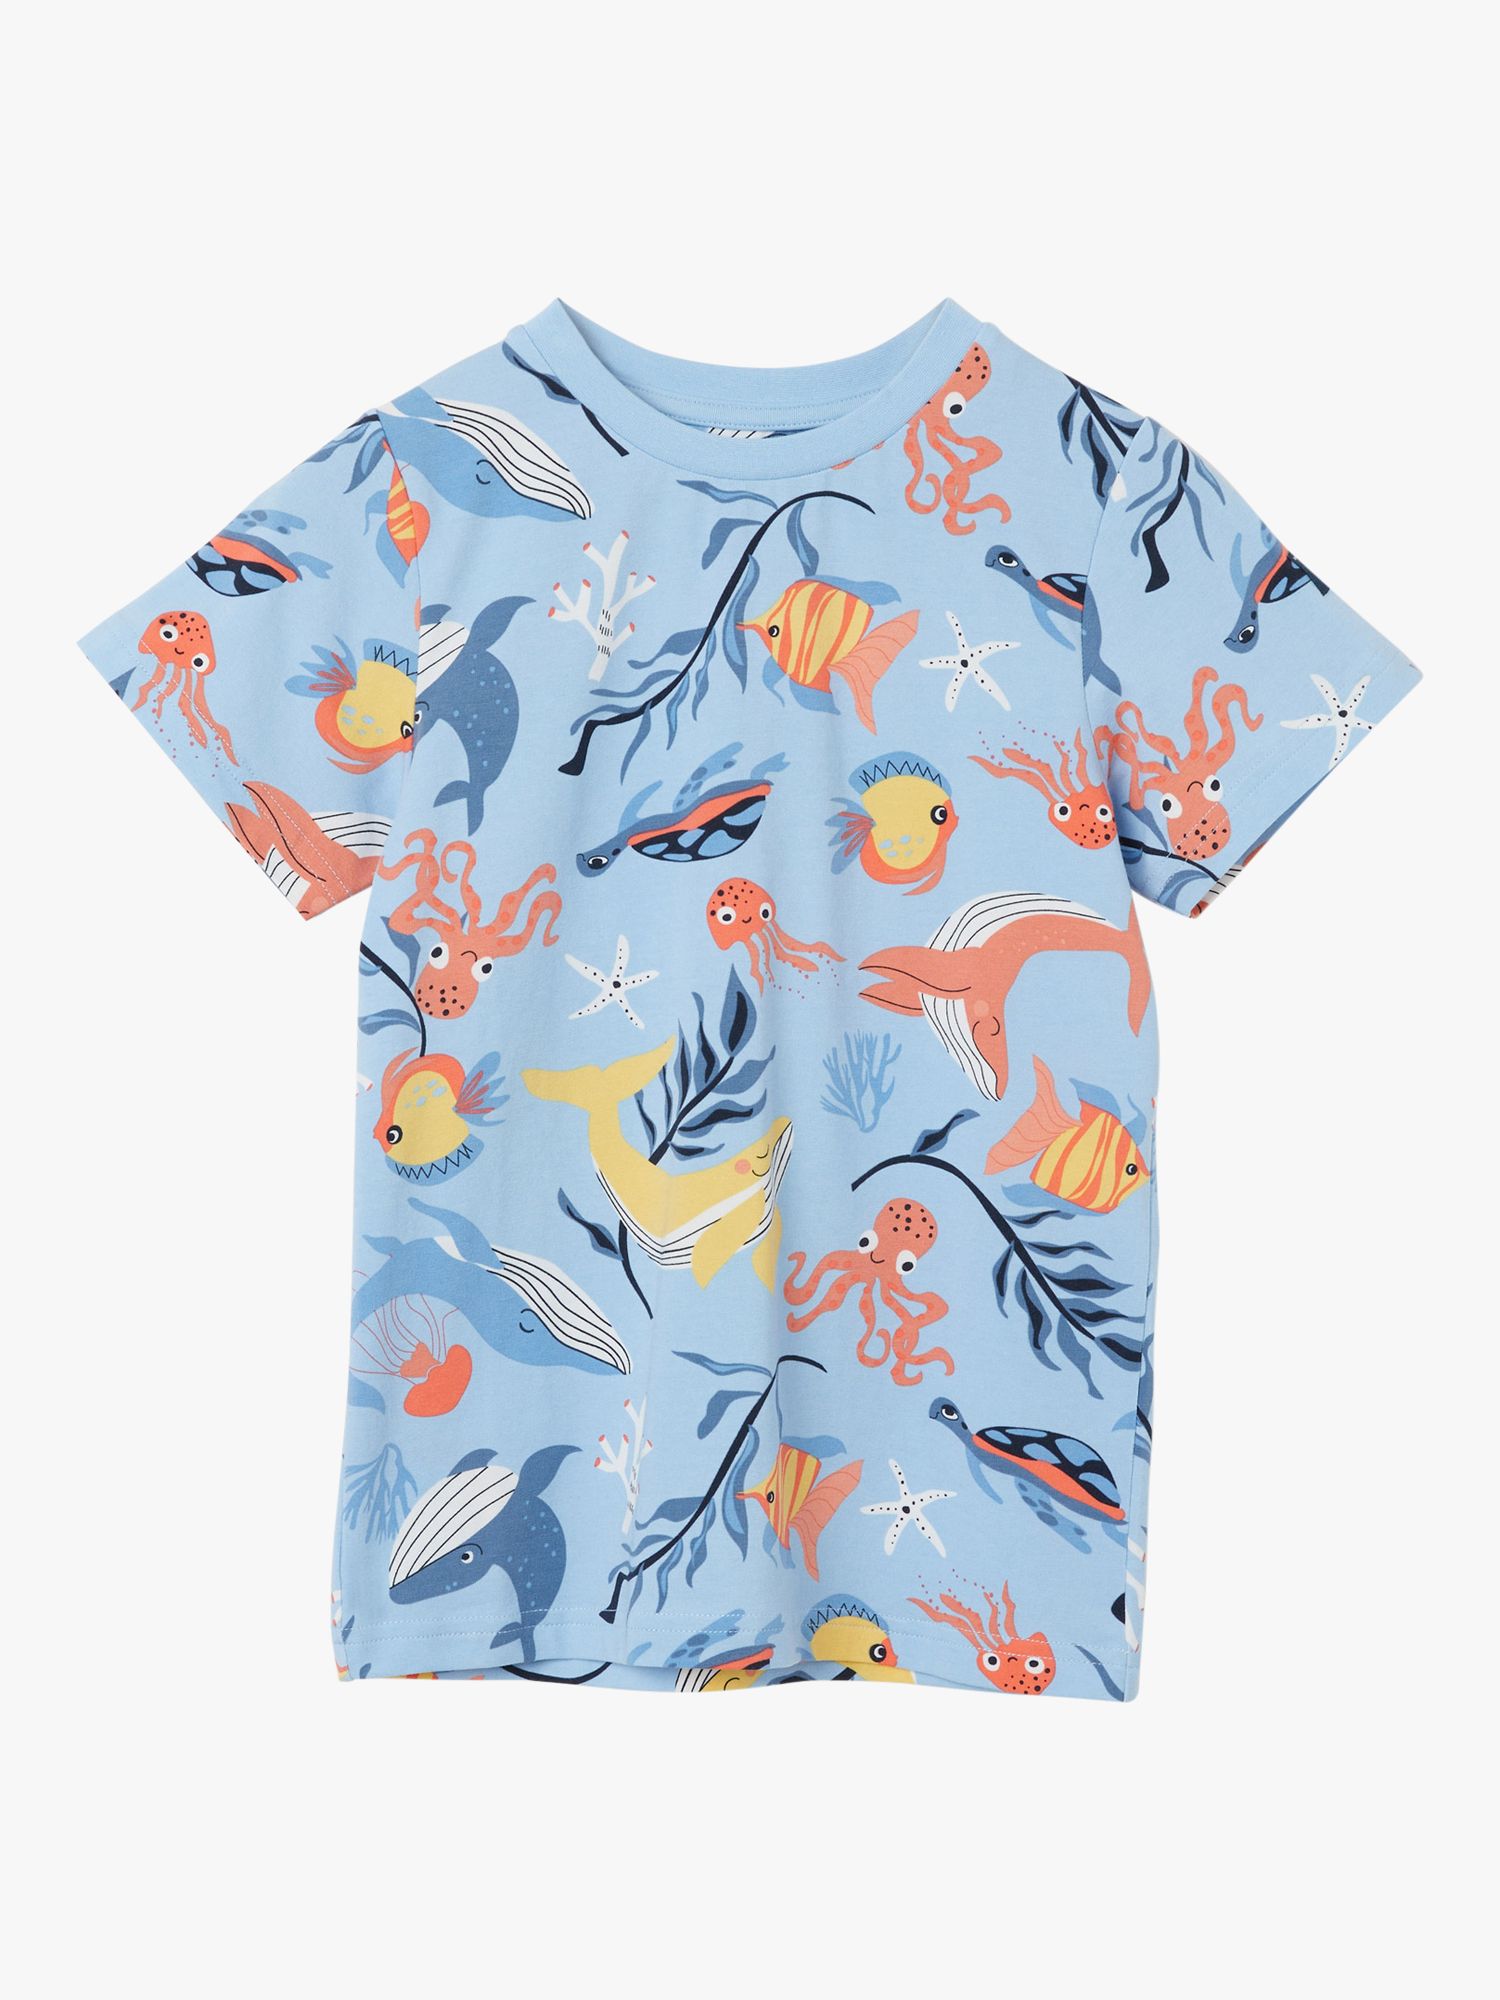 Polarn O. Pyret Kids' Sea Life Print T-Shirt, Blue/Multi